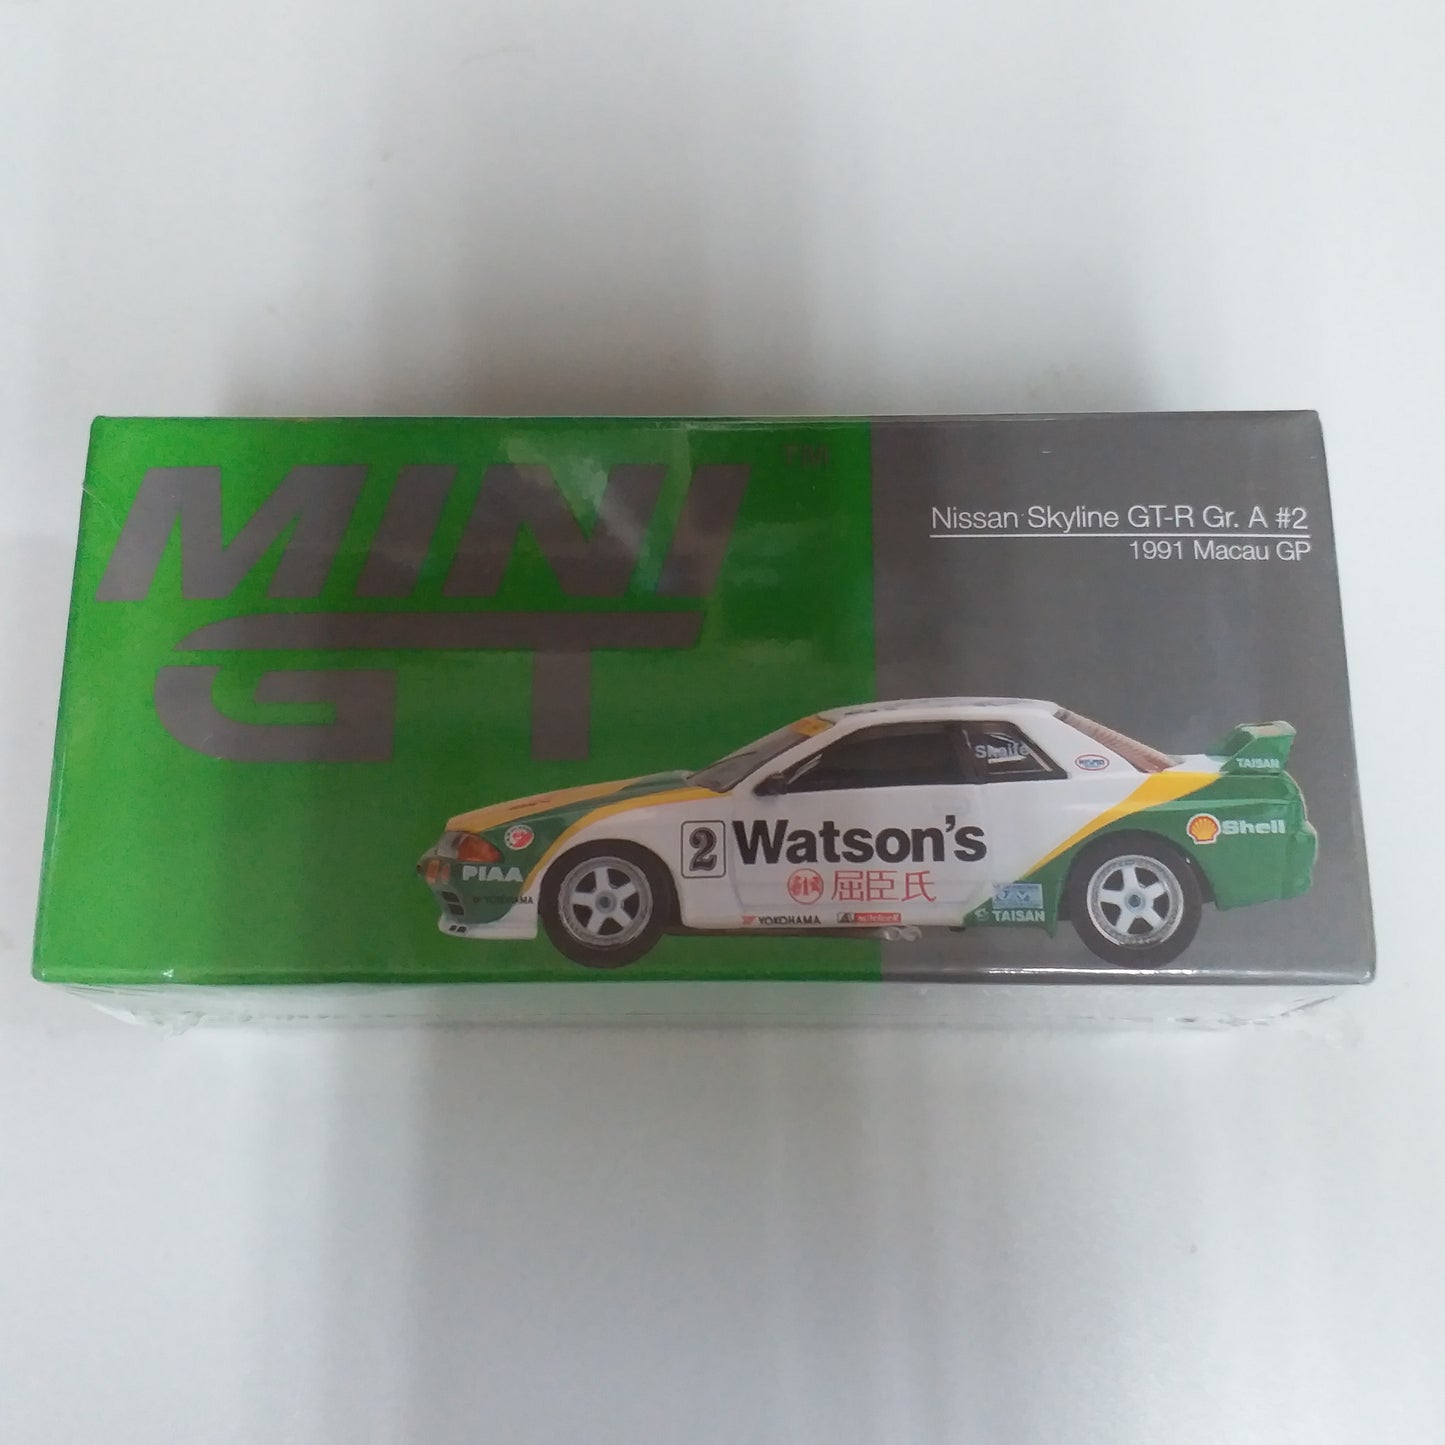 Mini GT #377 1:64 Nissan Skyline GT-R Gr.A #2 1991 Macau GP